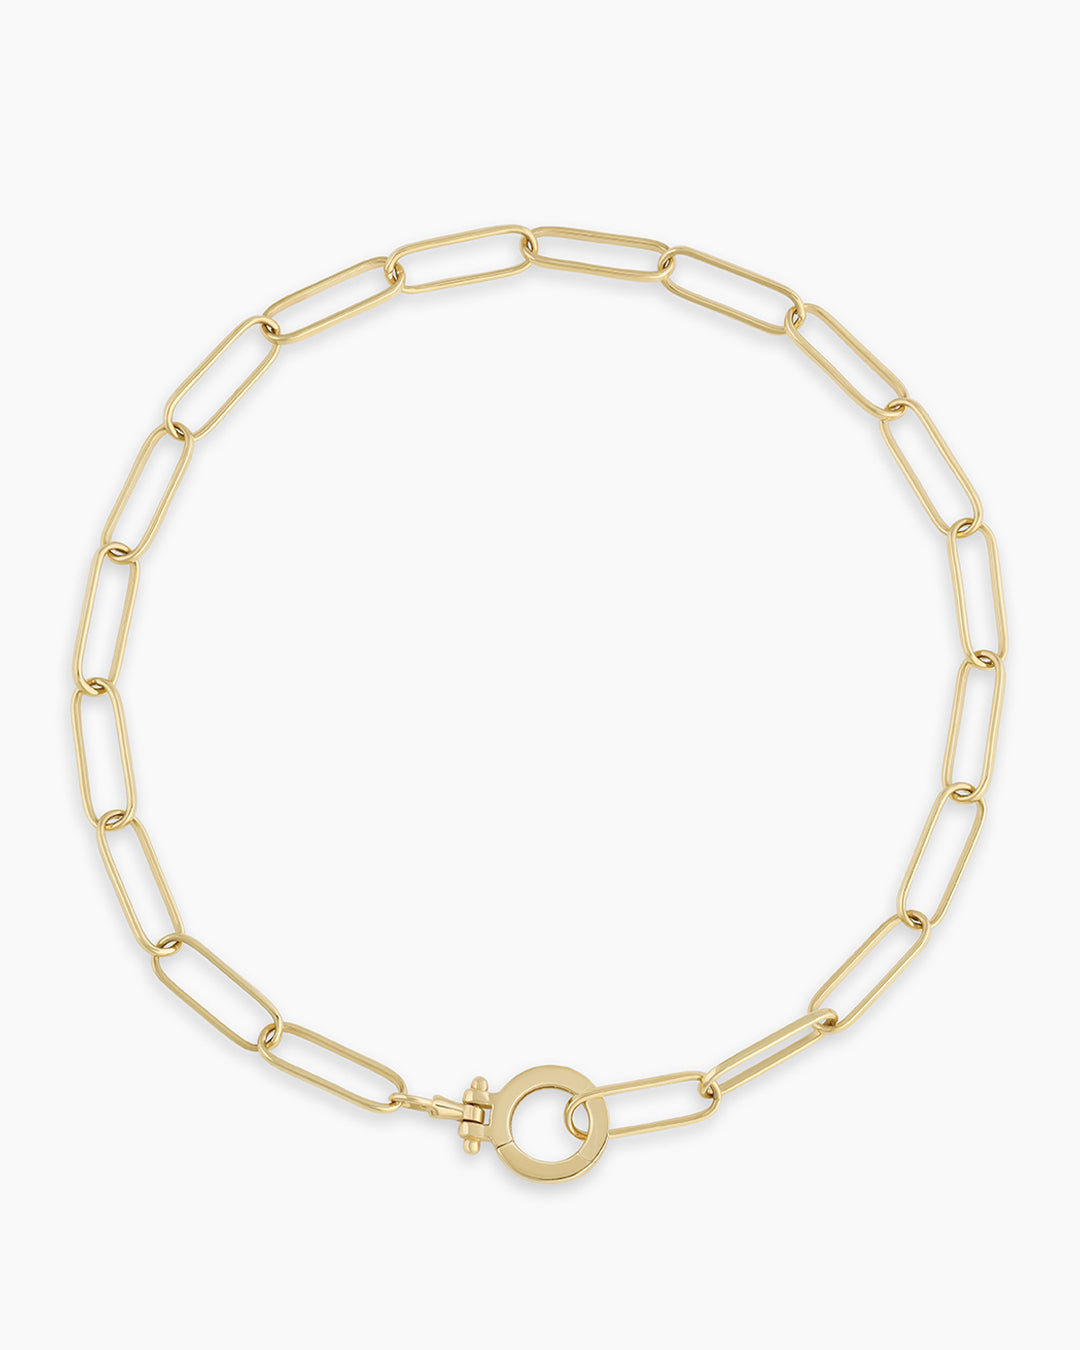 Diamond Pavé Alphabet Bracelet in J K Solid Gold, Women's by Gorjana